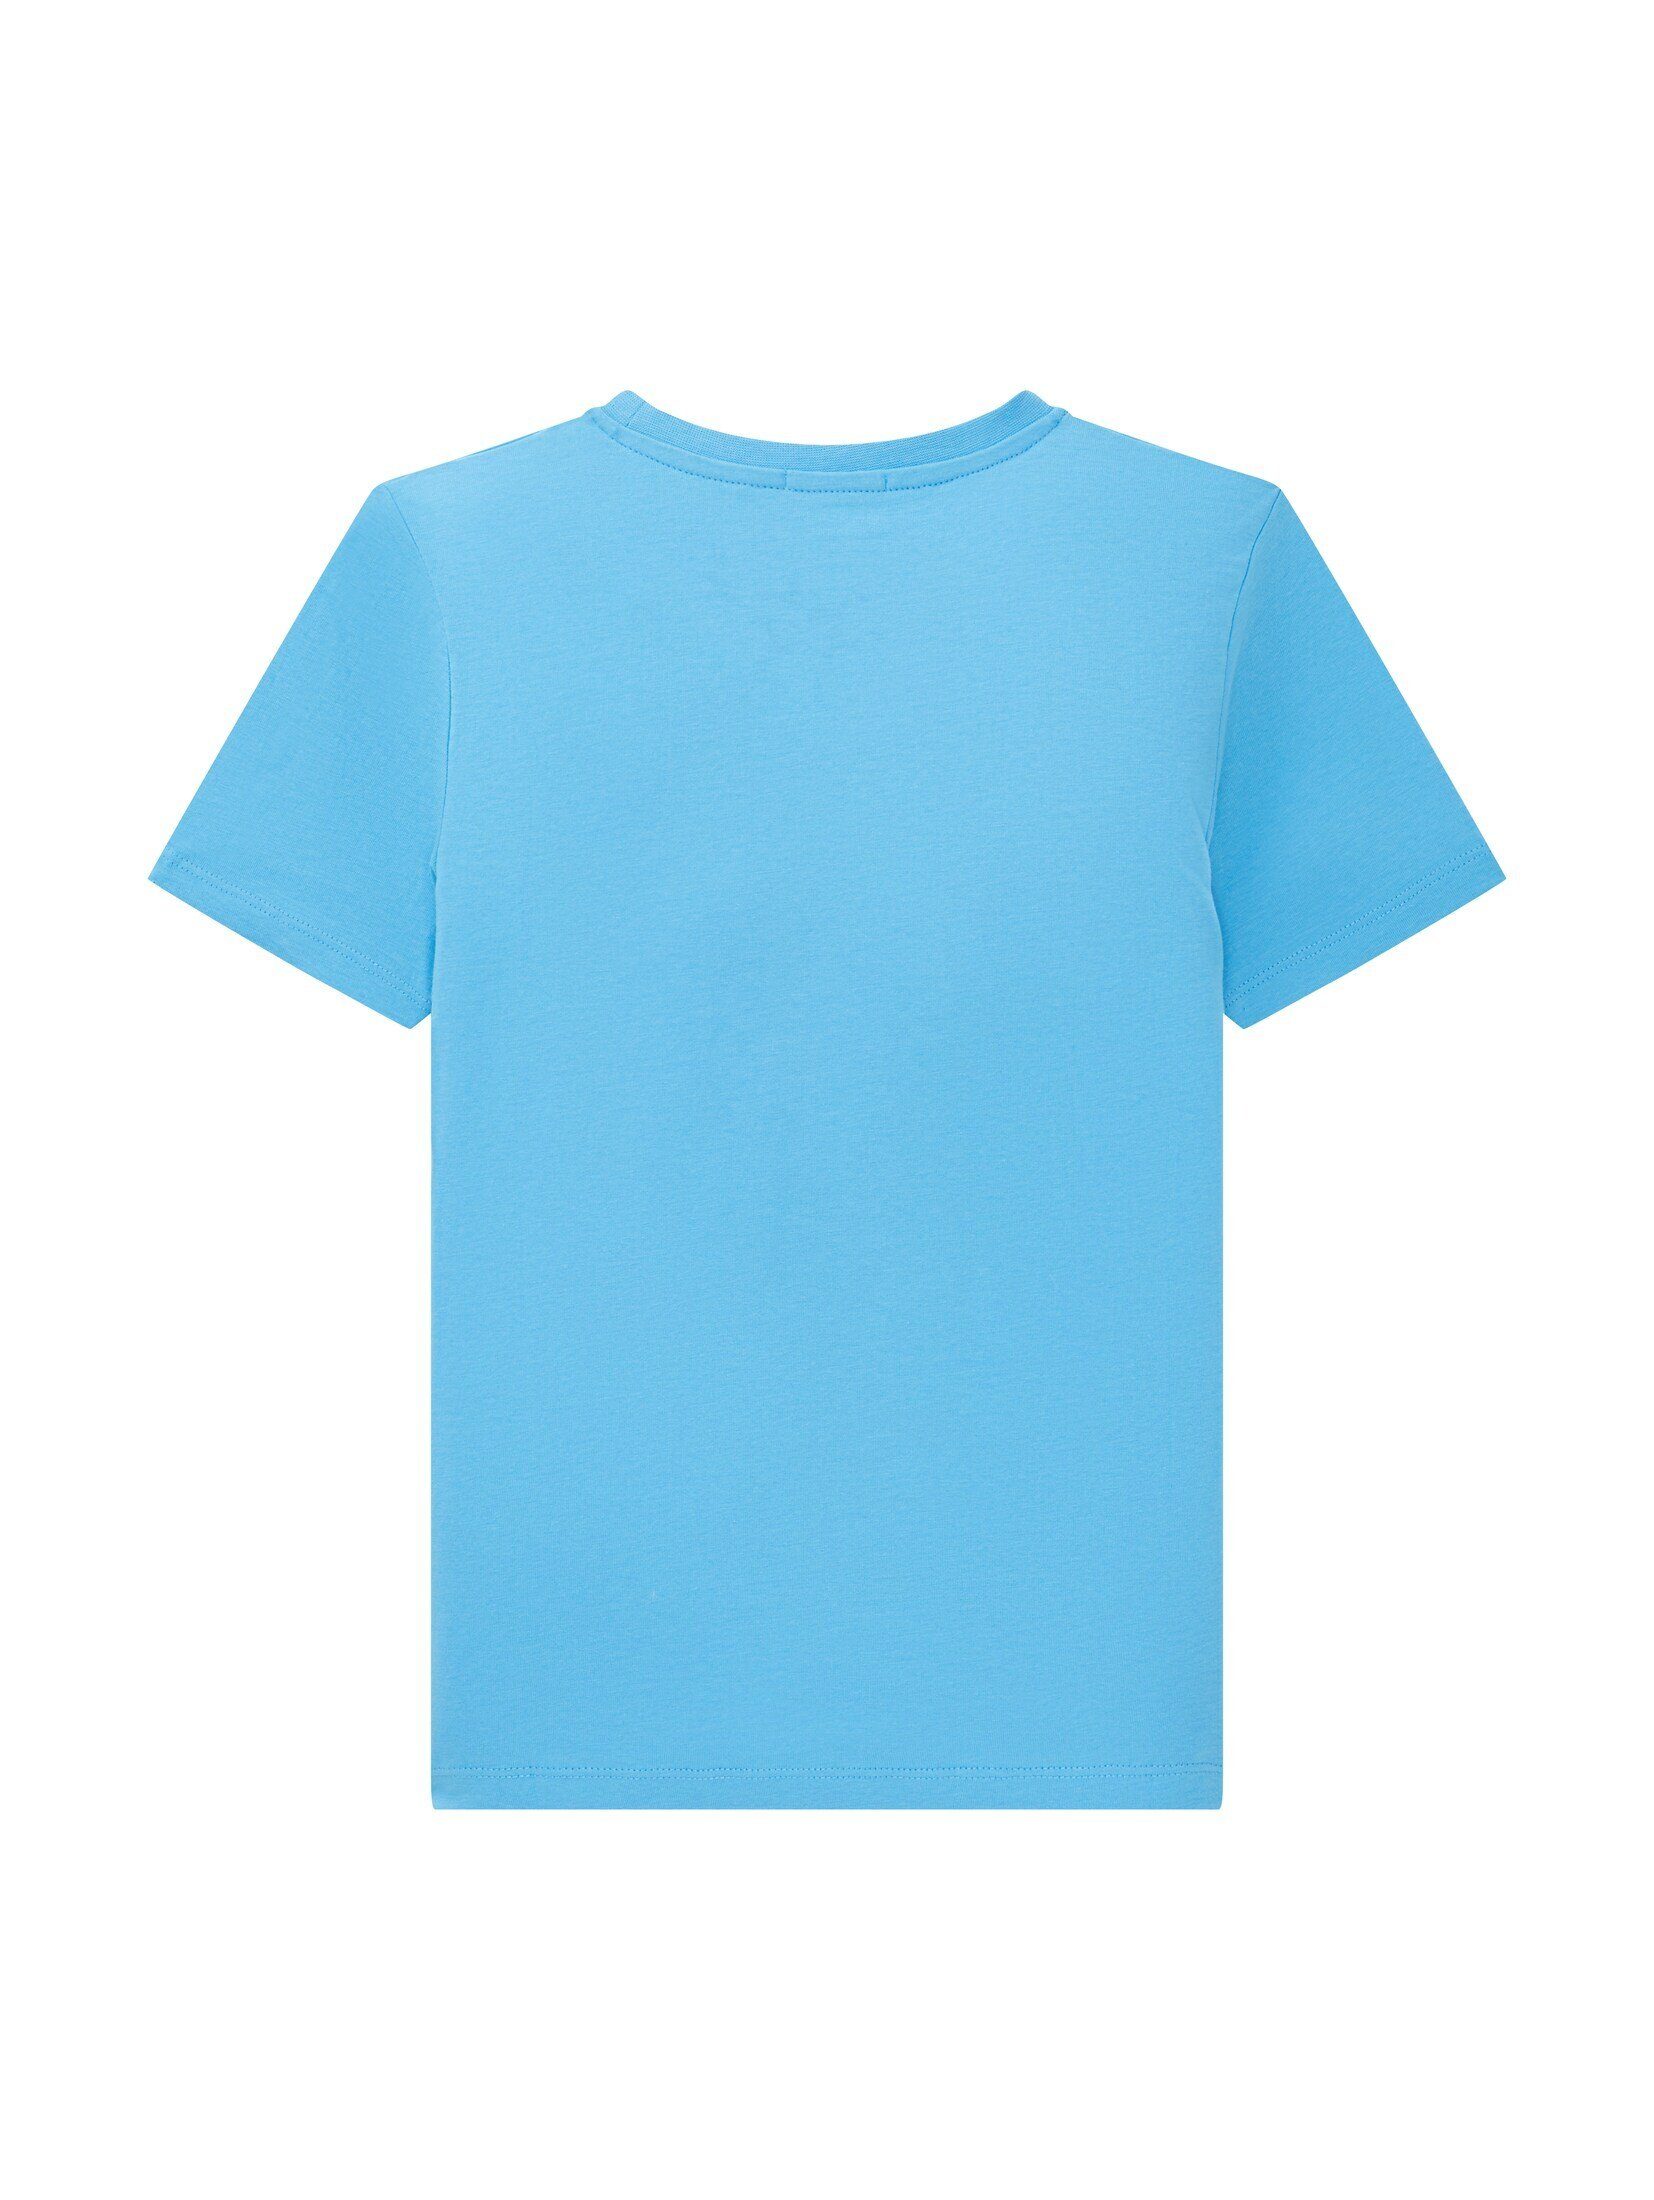 TOM TAILOR T-Shirt T-Shirt blue rainy Fotoprint mit sky